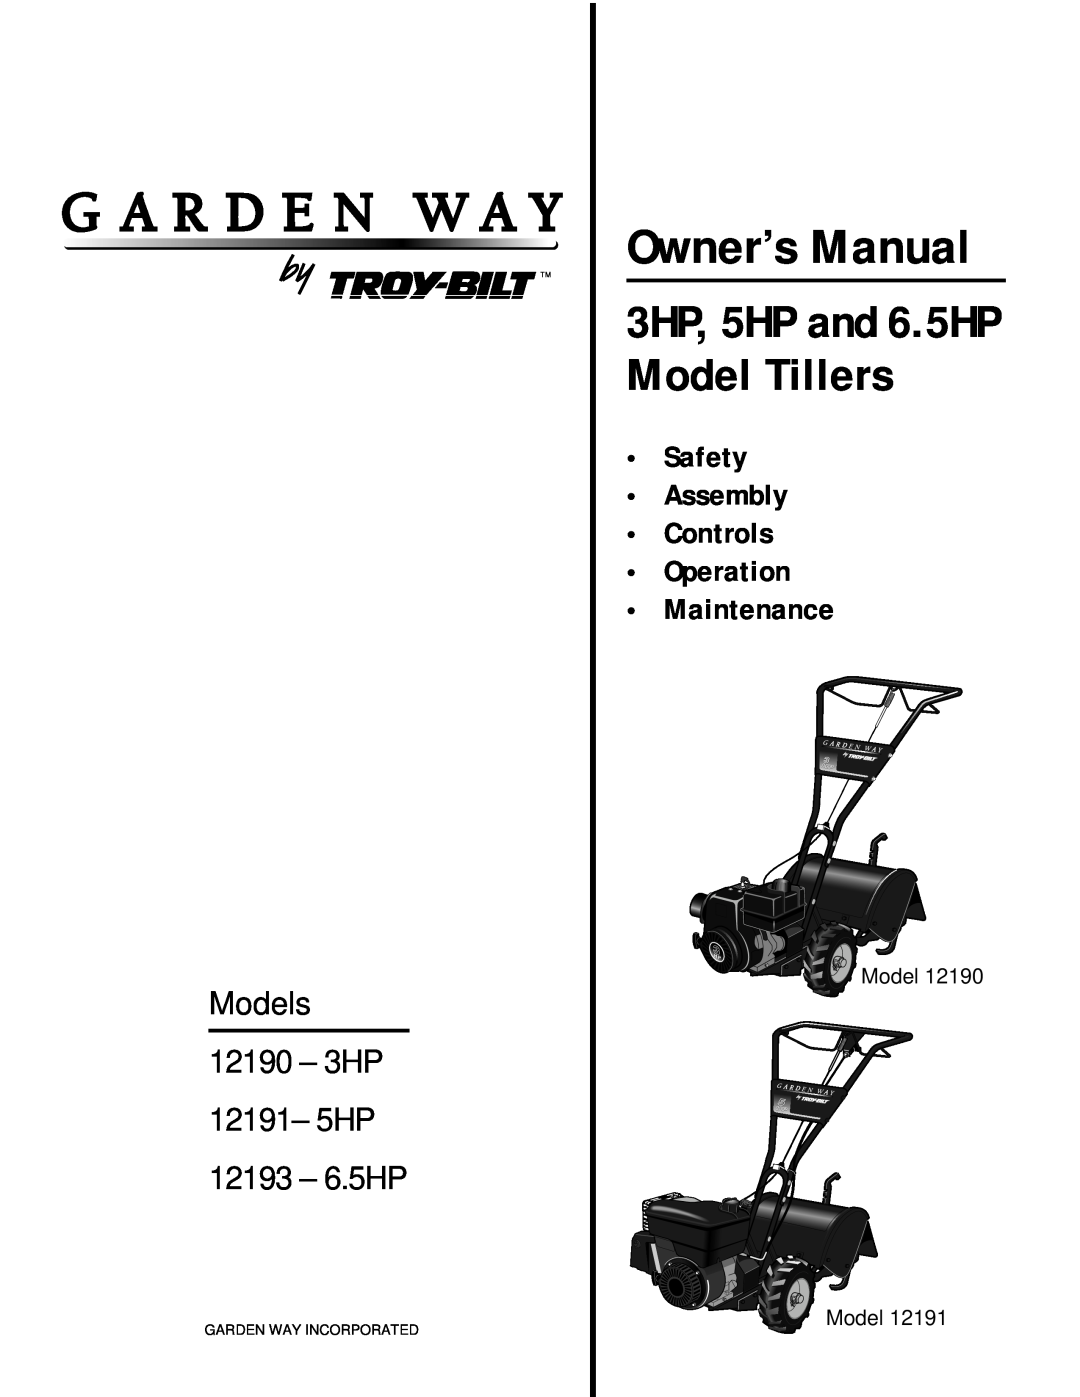 Troy-Bilt 12214 - 5.5HP owner manual Safety Assembly Controls Operation Maintenance, Owner’s Manual, Model Model 